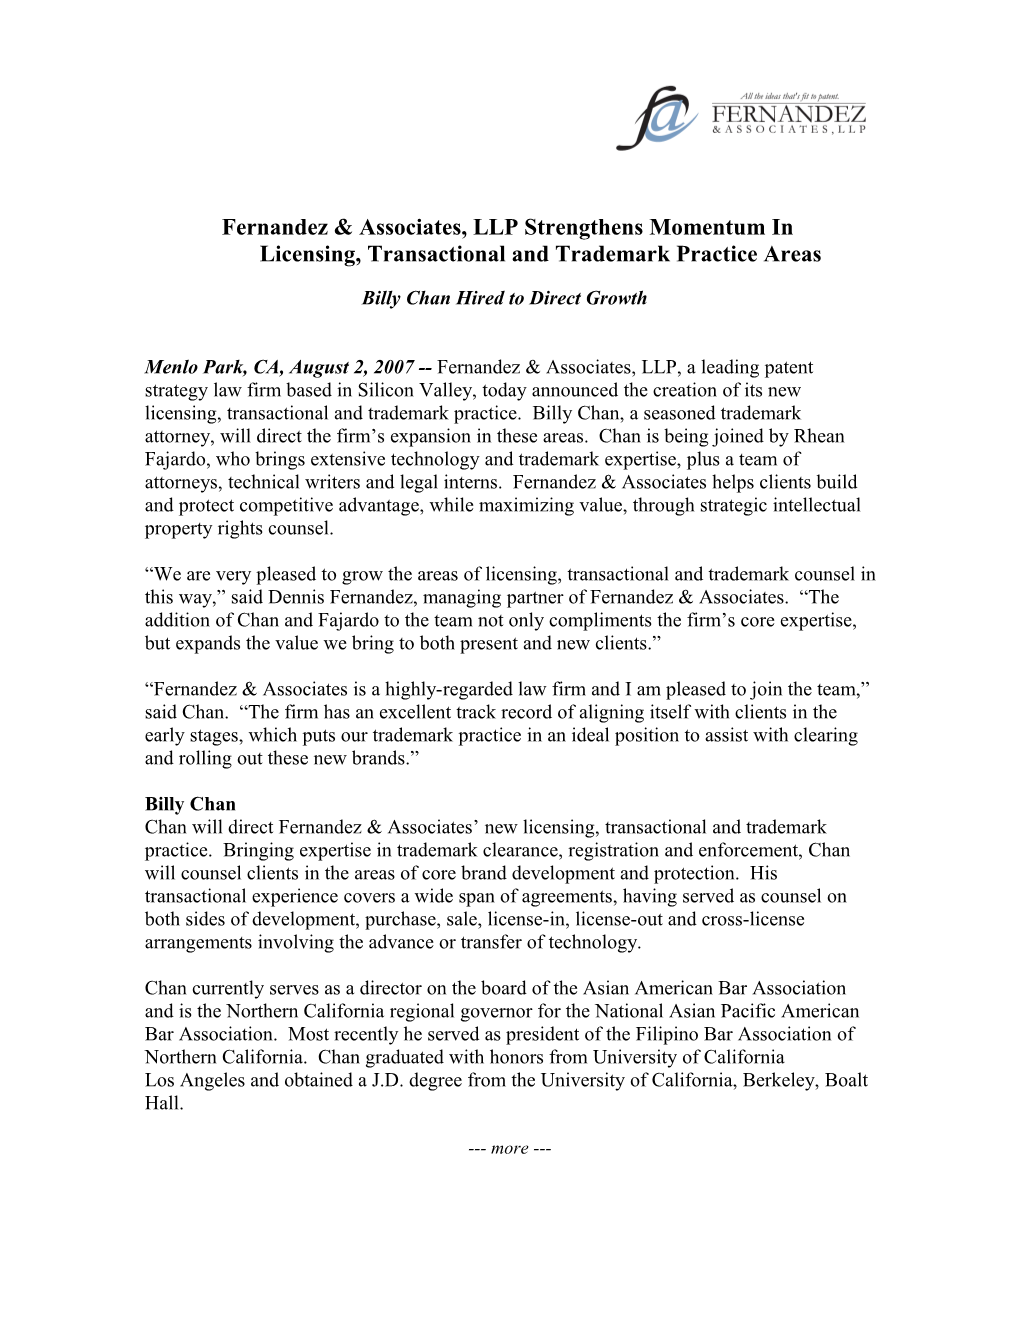 Fernandez & Associates, LLP Strengthens Momentum in Licensing, Transactional and Trademark